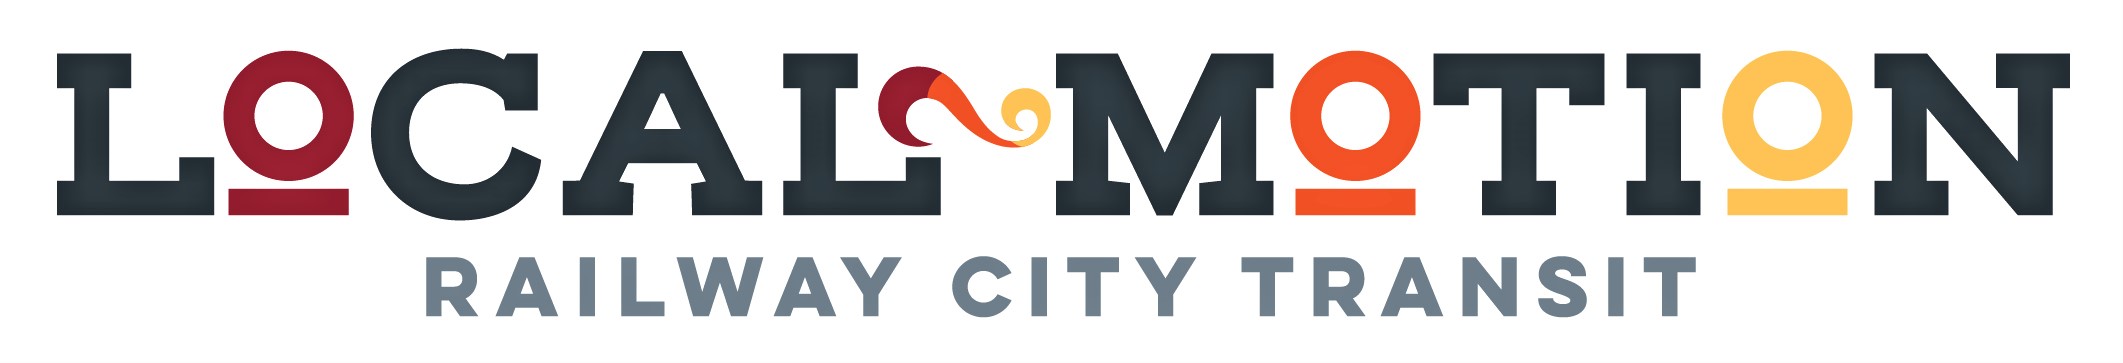 Railway City Transit logo